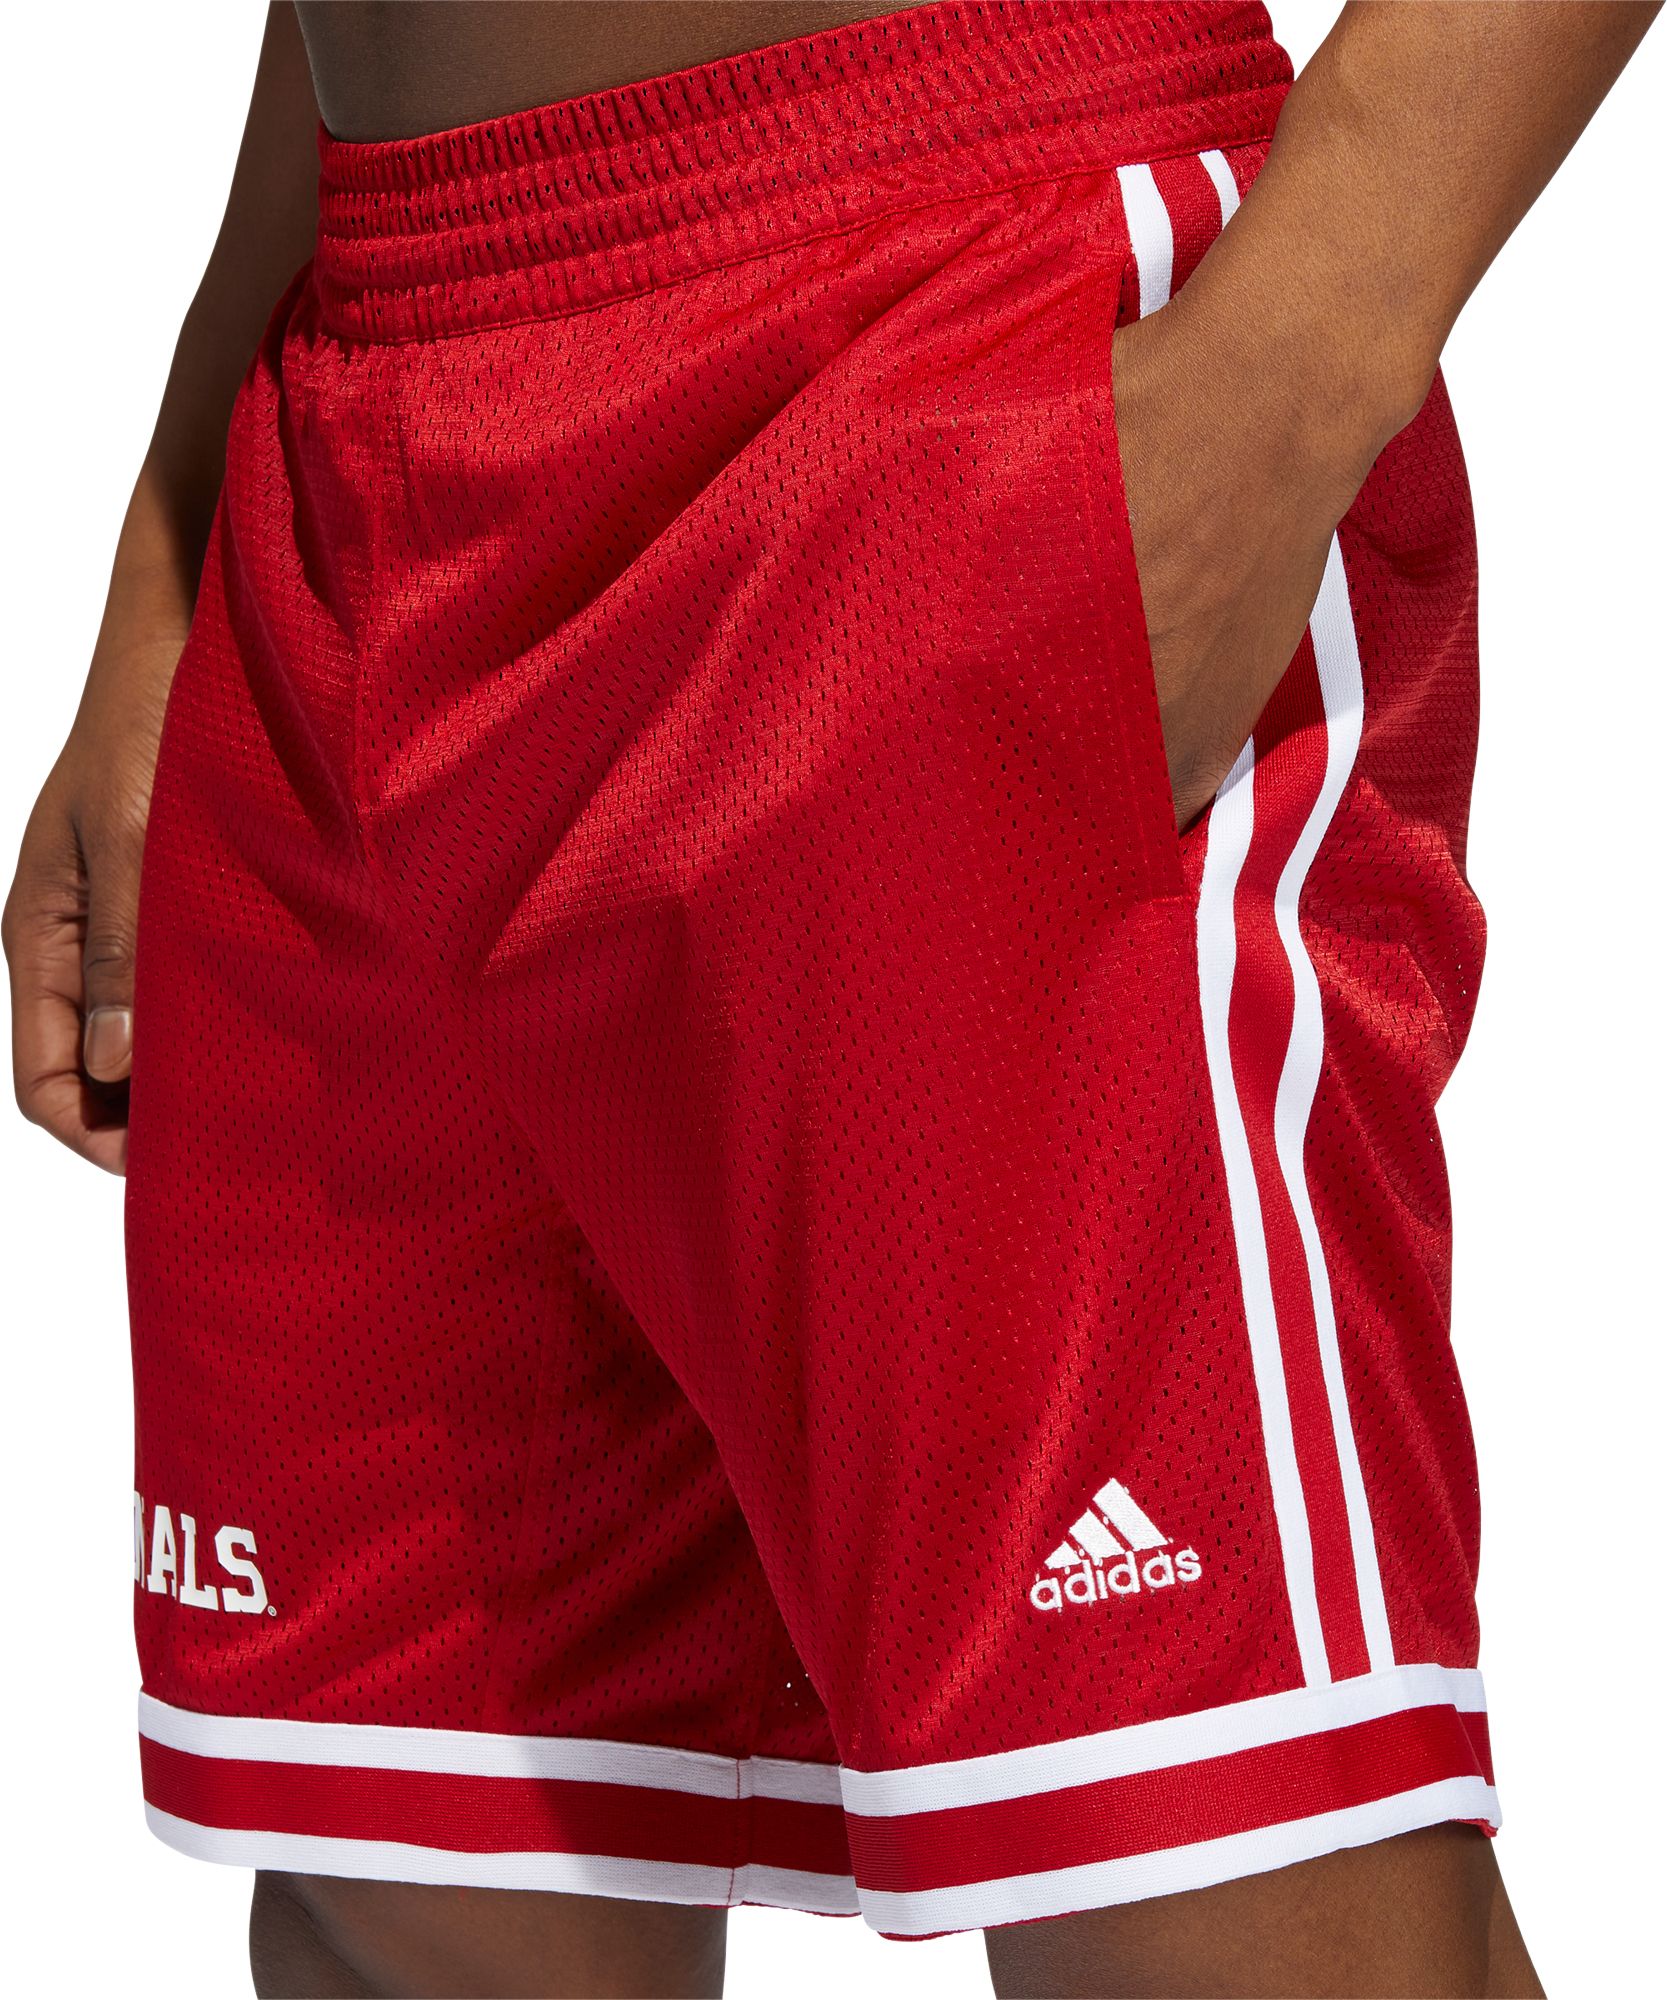 Big Boys and Girls Red Louisville Cardinals Basketball Long Sleeve T-shirt